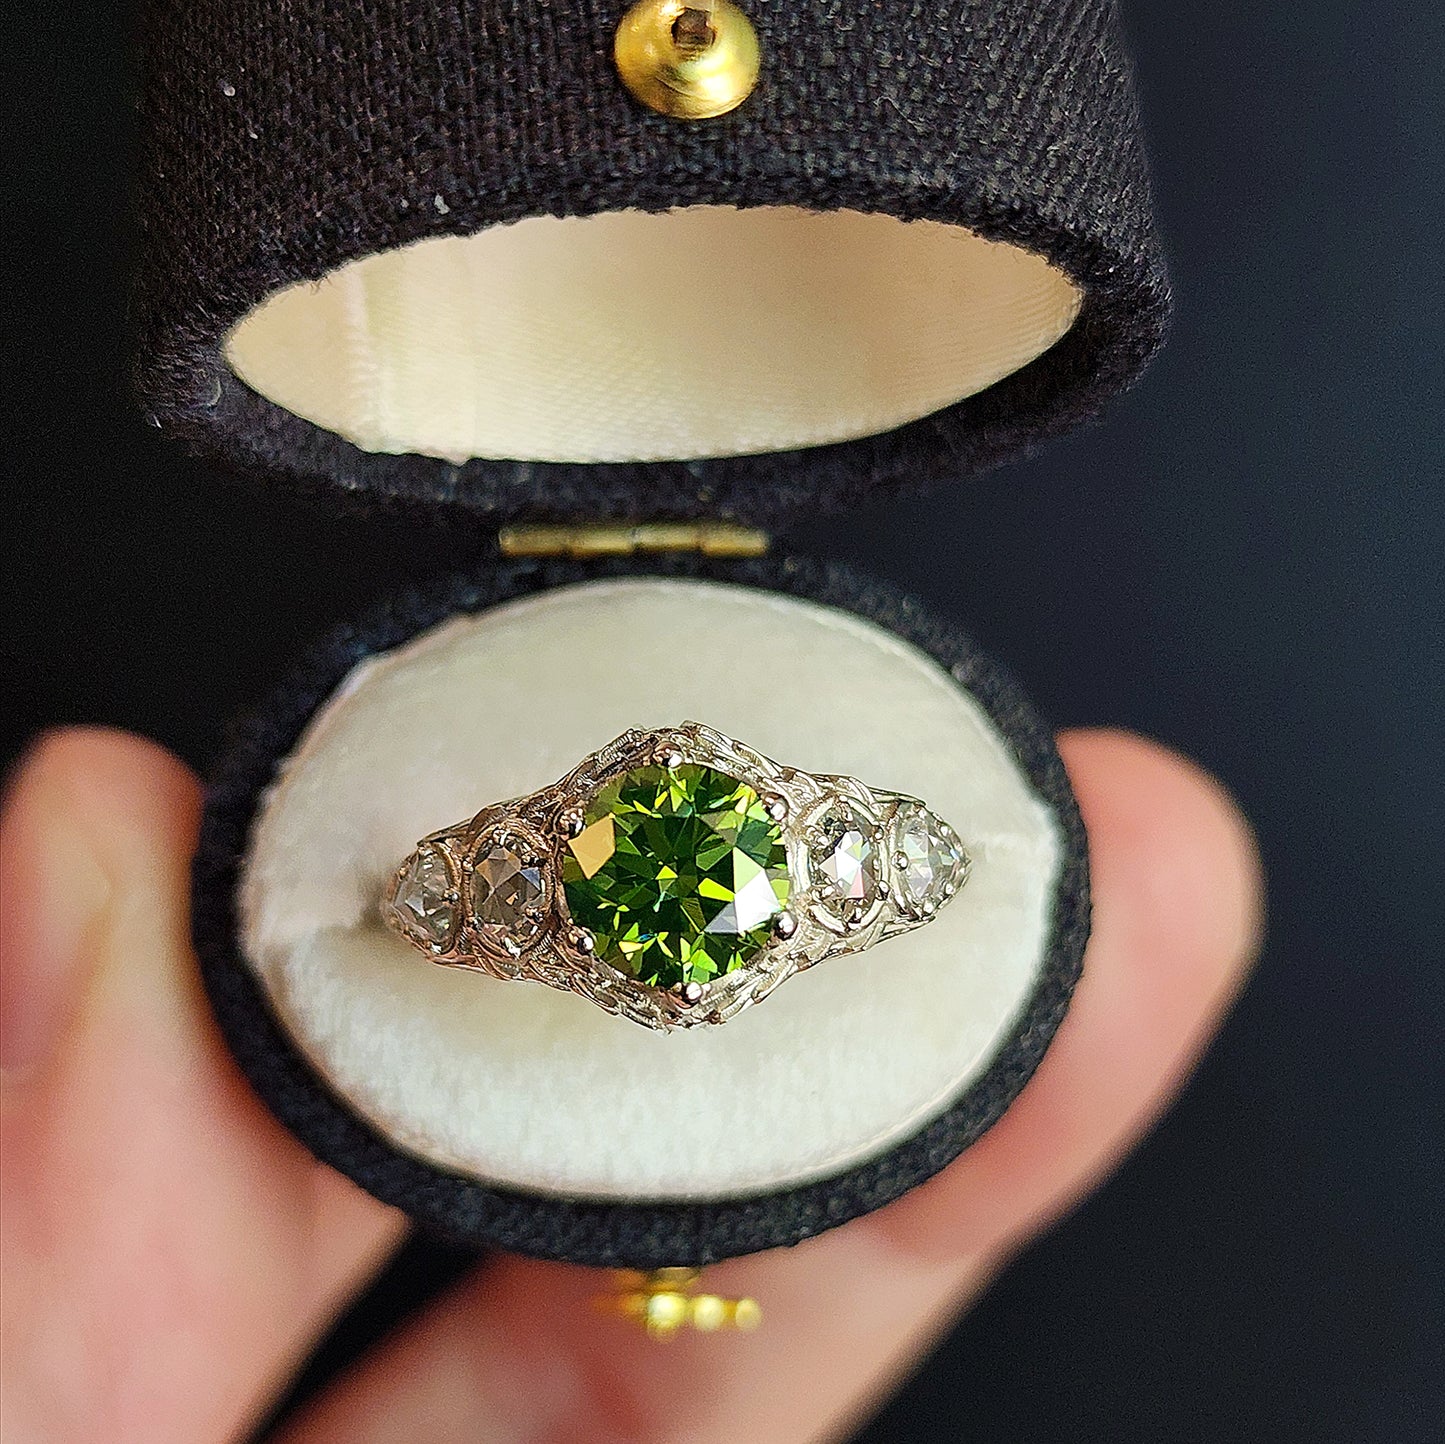 green diamond bramble ring 14k white gold nature inspired fantasy jewelry fairytale ethereal unique alternative bridal rose cut diamond